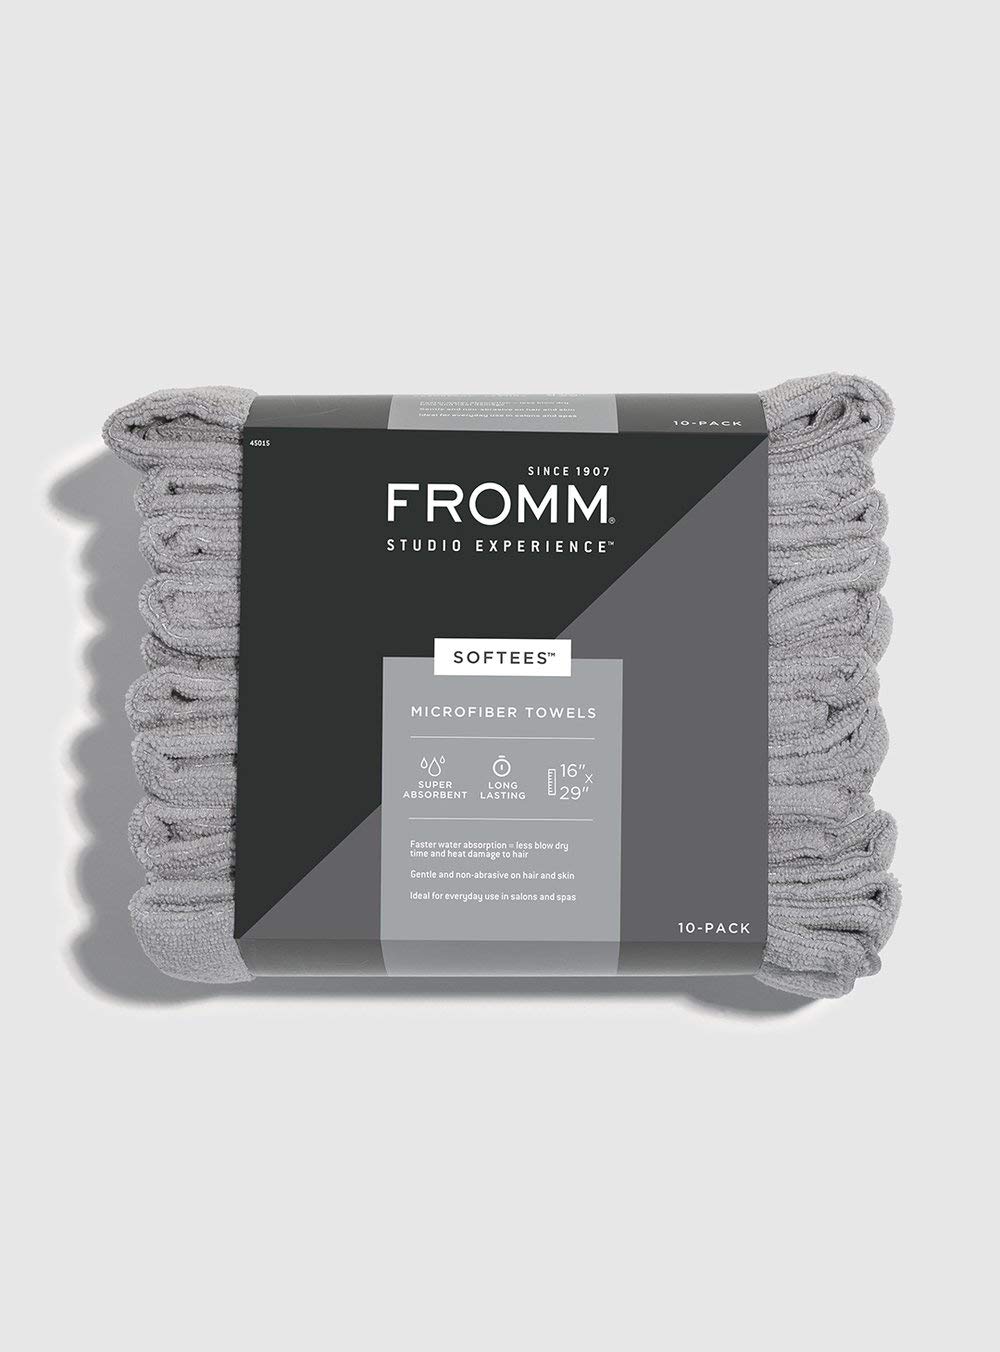 Fromm Softees Microfiber Towels